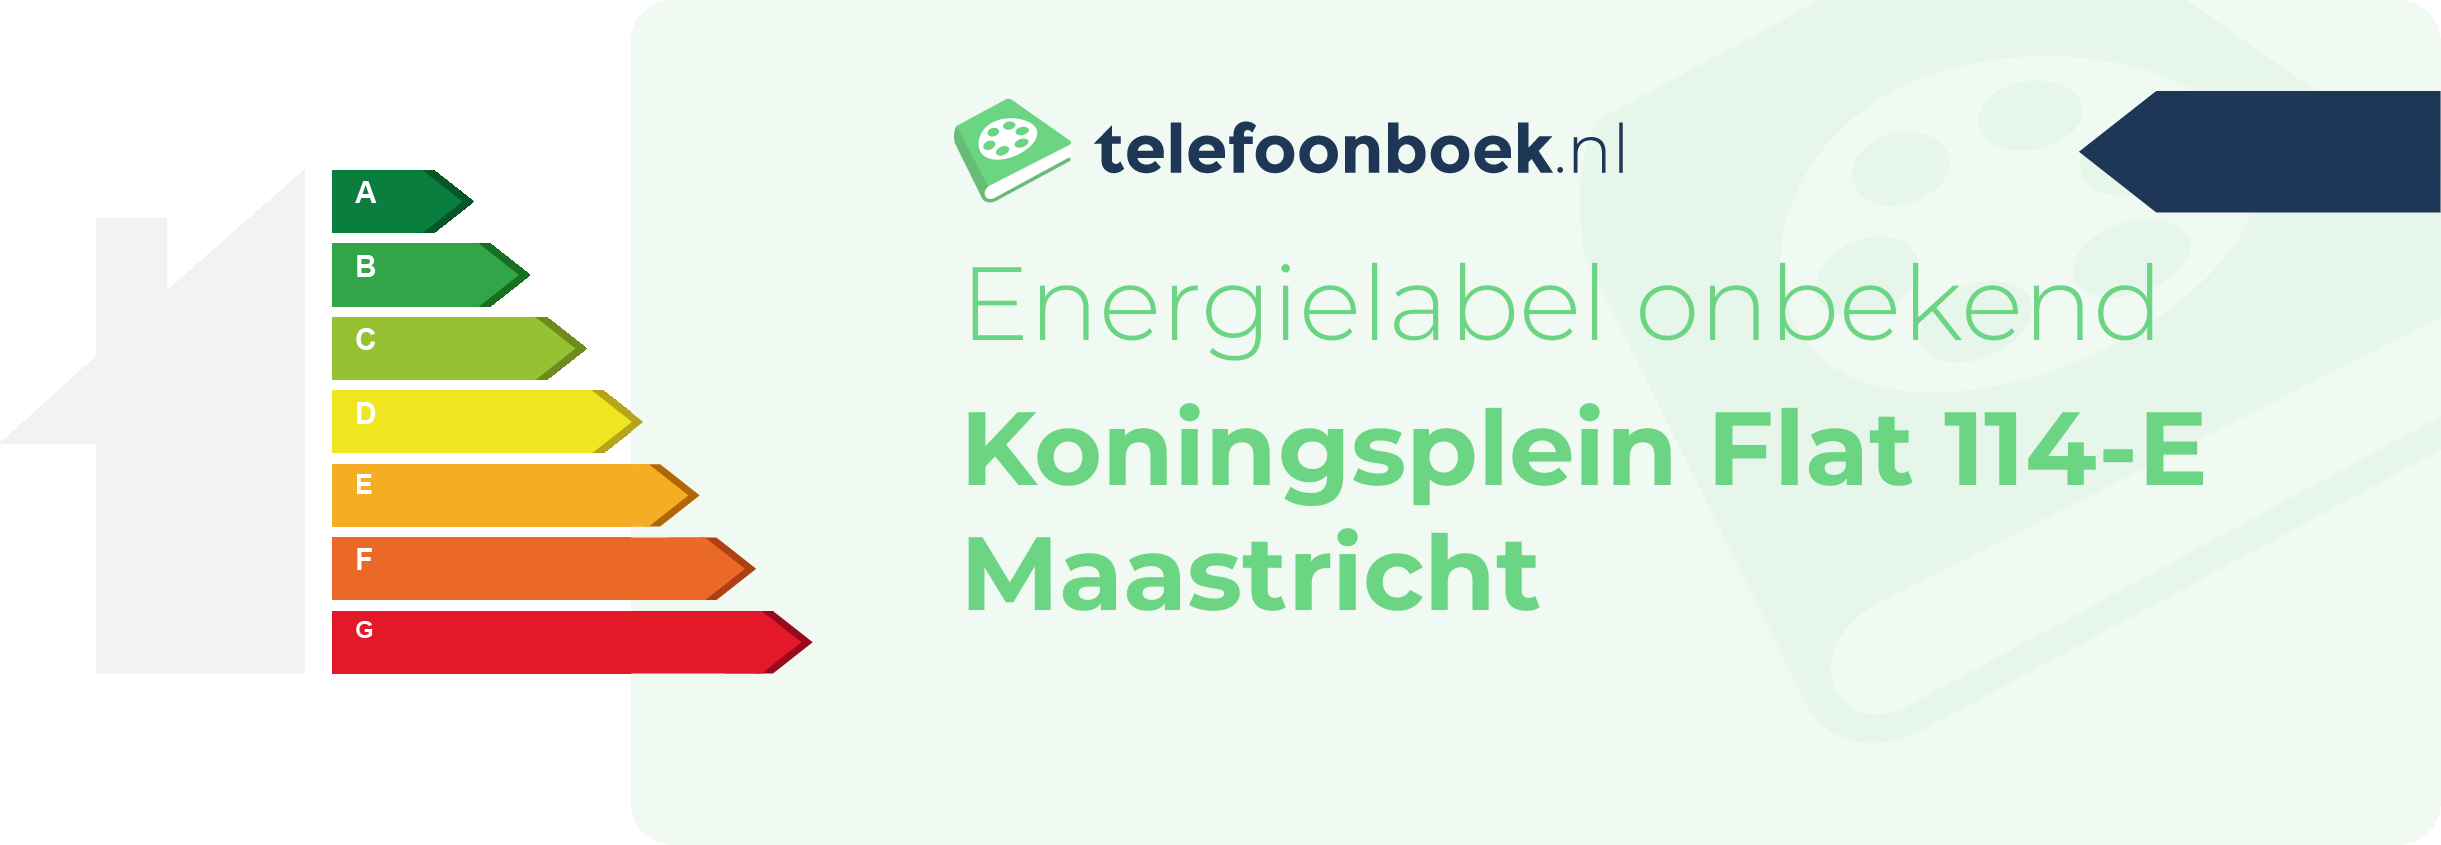 Energielabel Koningsplein Flat 114-E Maastricht